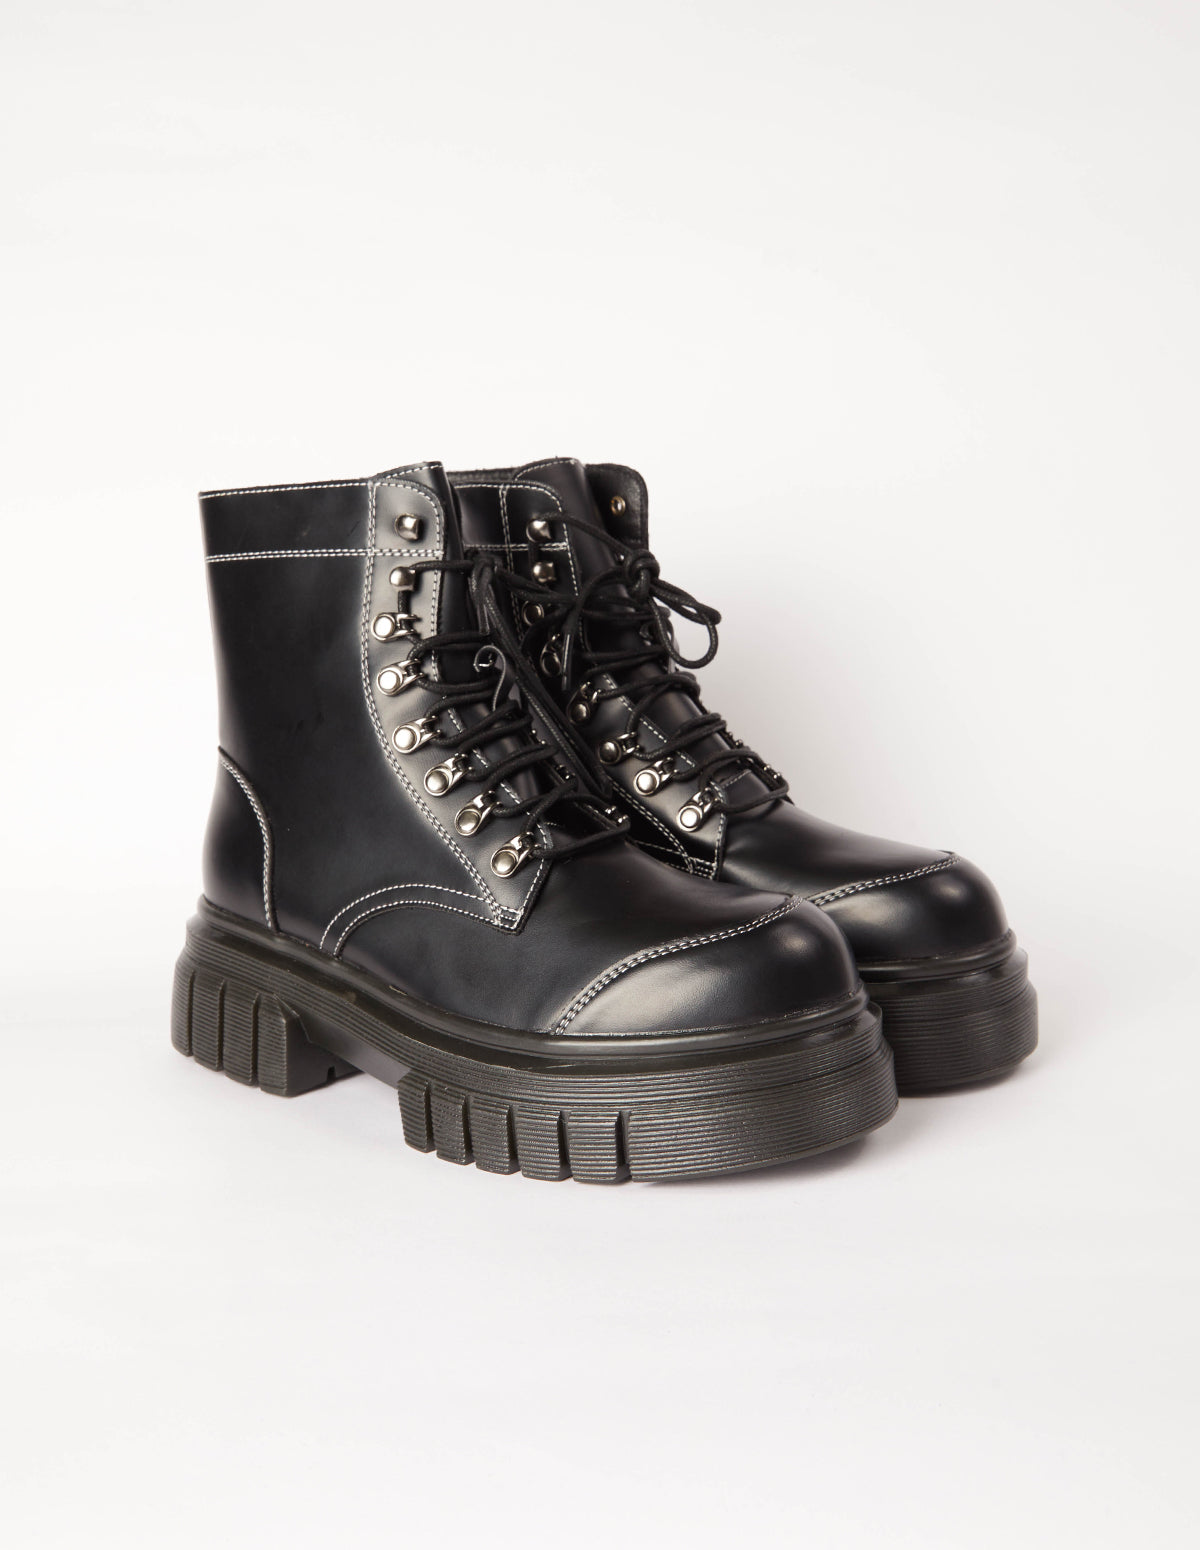 PU Lace Up Combat Style Boots - Jul